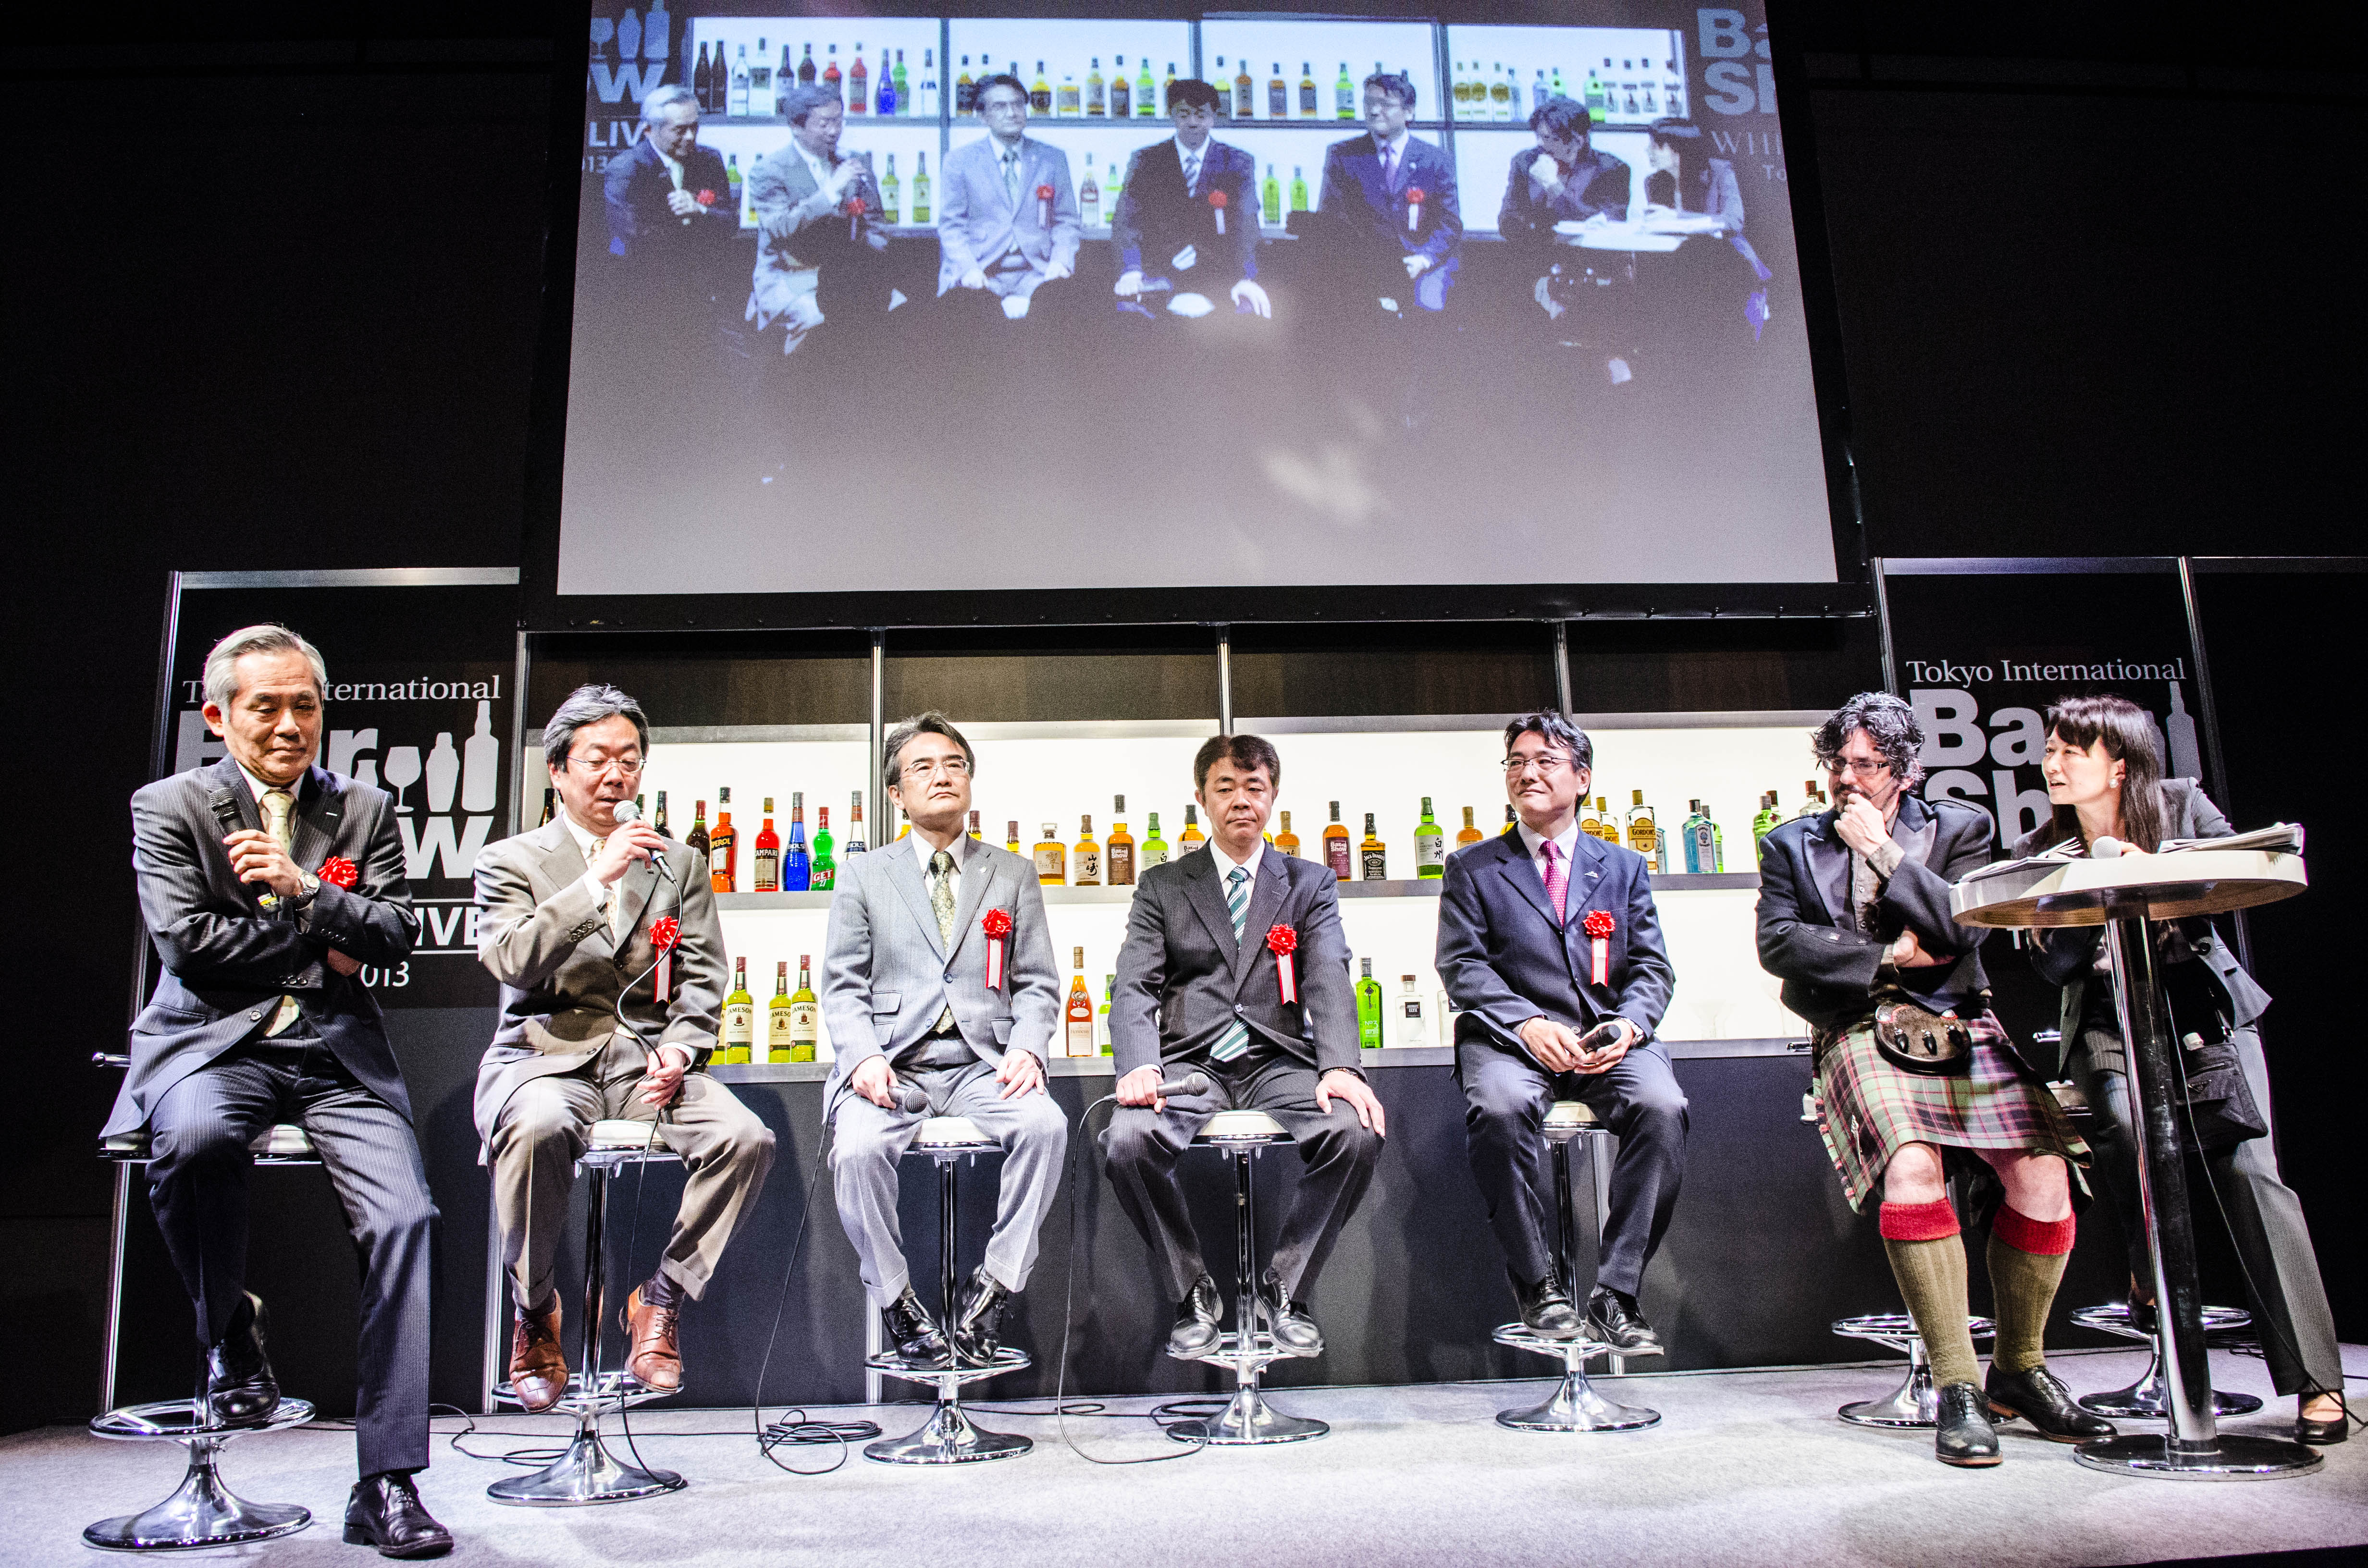 Tokyoインターナショナル・バーショー +ウイスキーライヴ2014」続報 WHISKY Magazine Japan